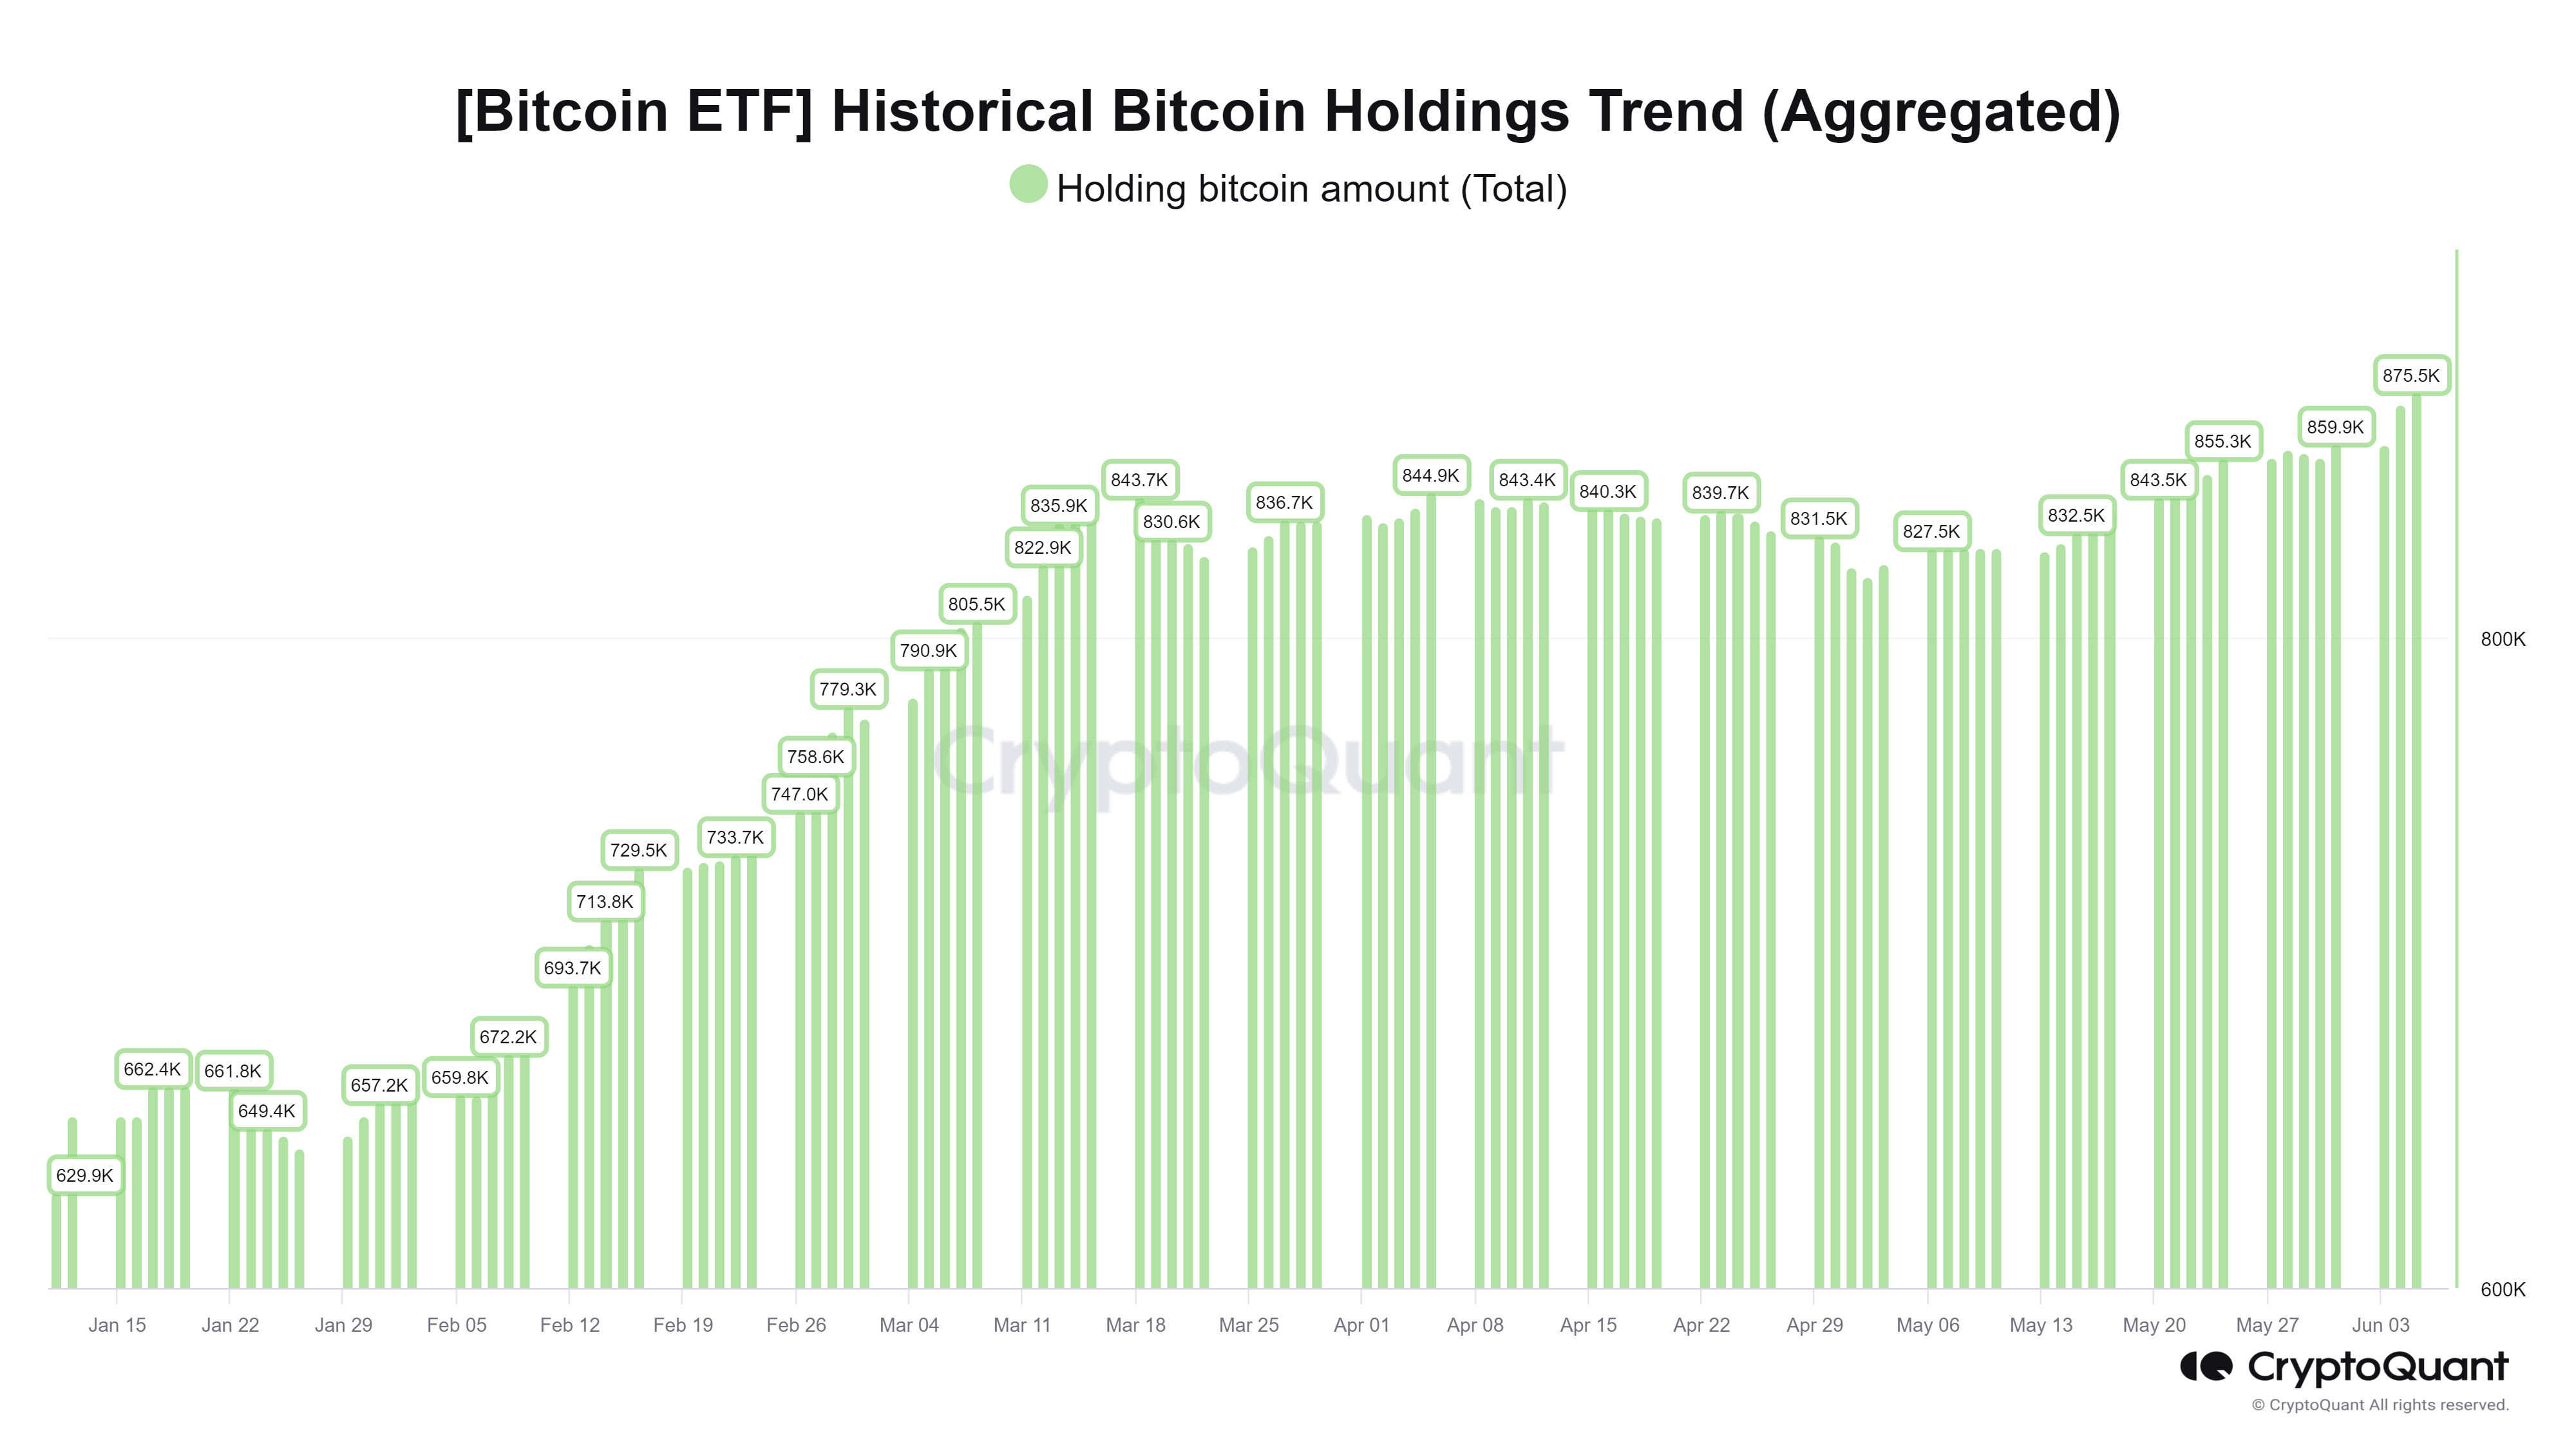 BTC Etfs Historical Bitcoin Holdings Trend (Aggregated) chart